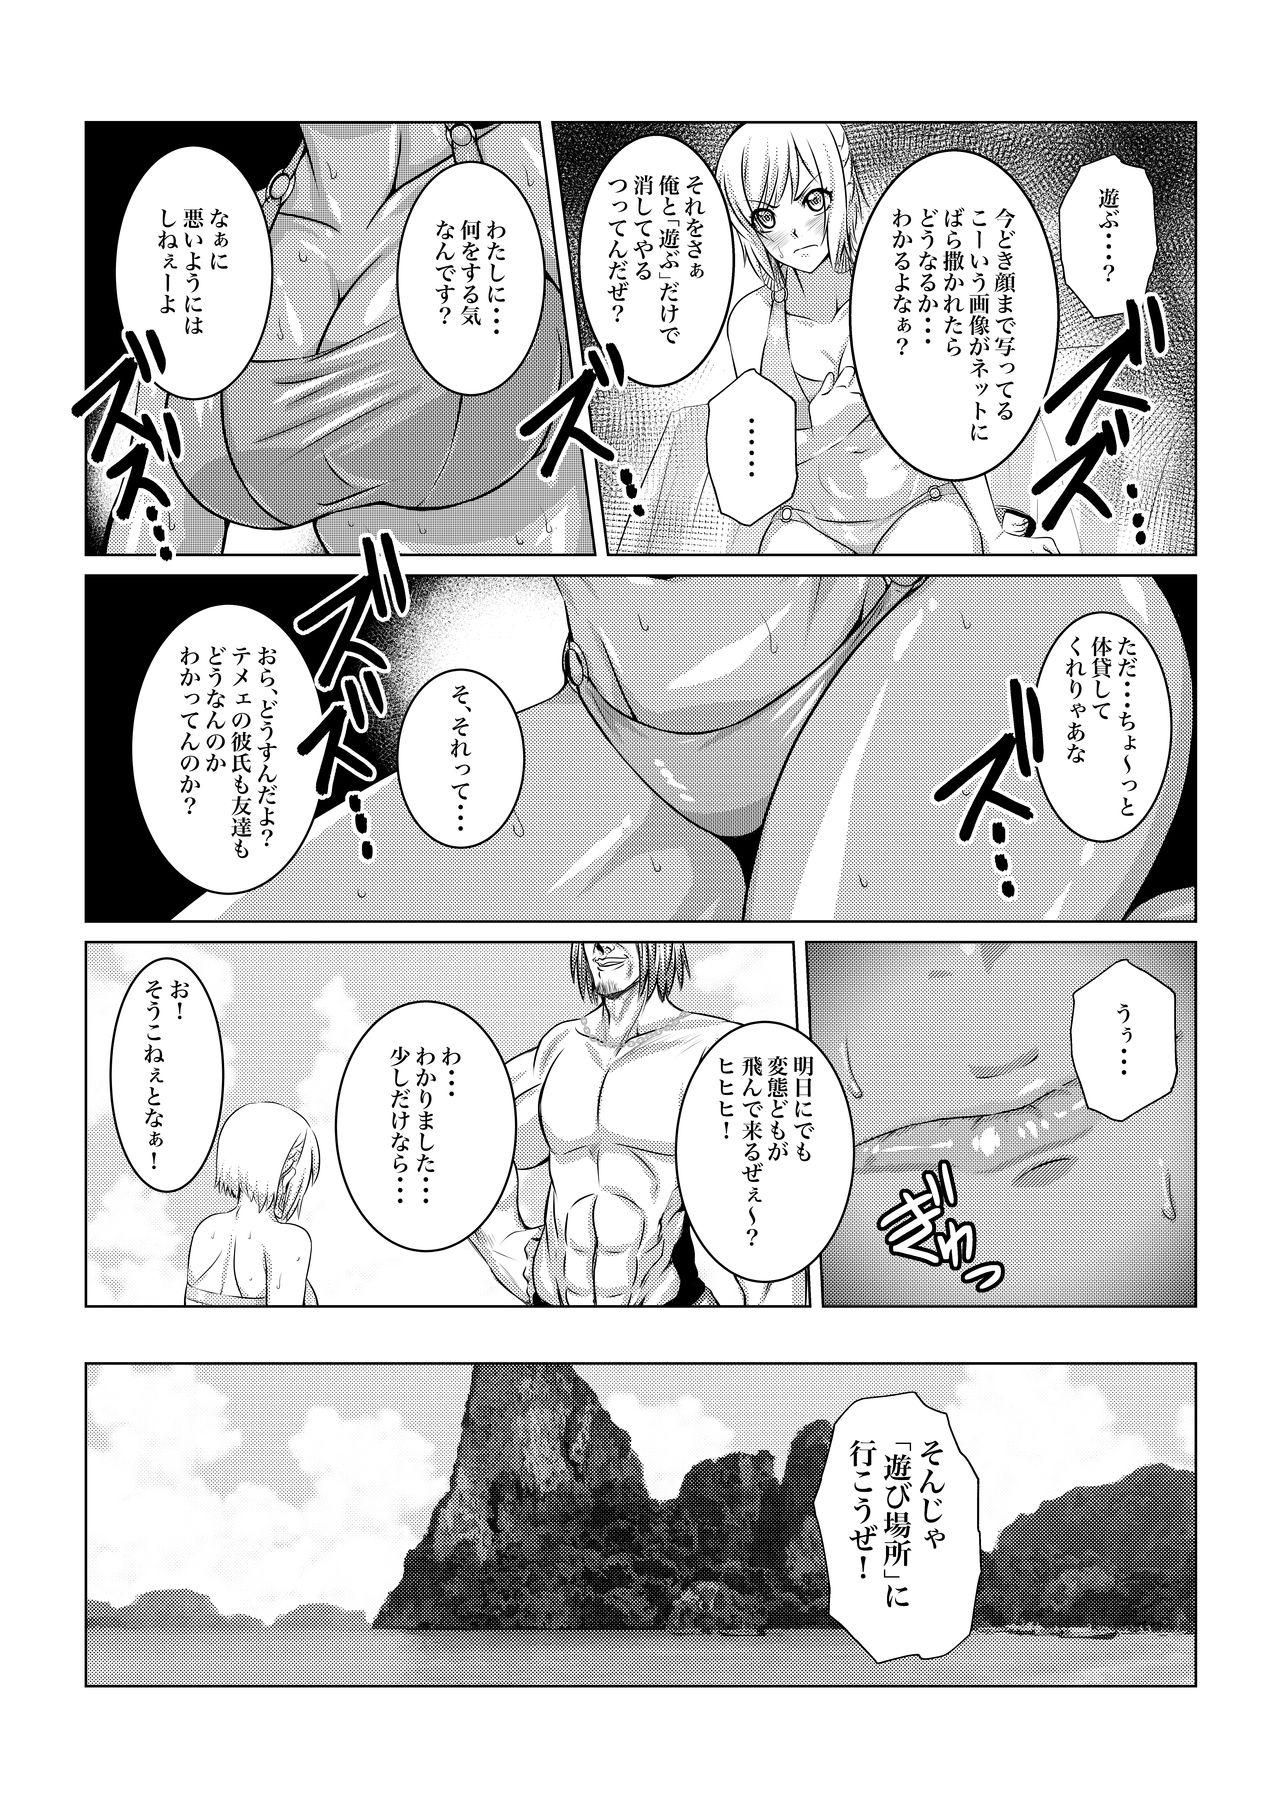 Japan Gekka Midarezaki - Tales of vesperia Movies - Page 8